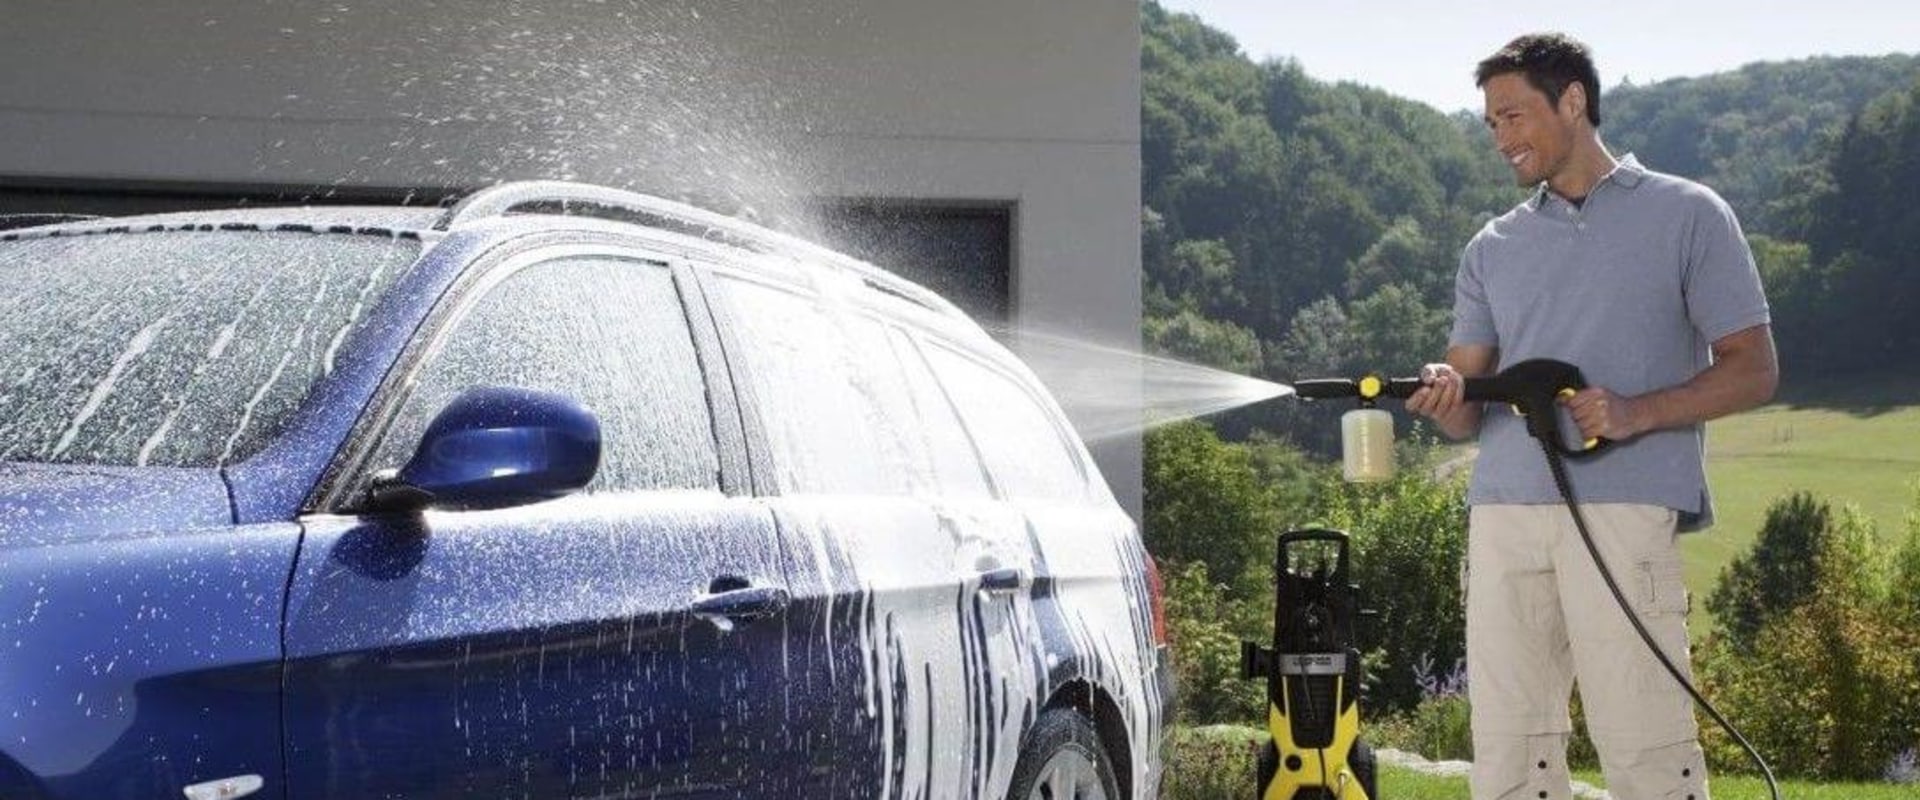 How does a modern car wash work?